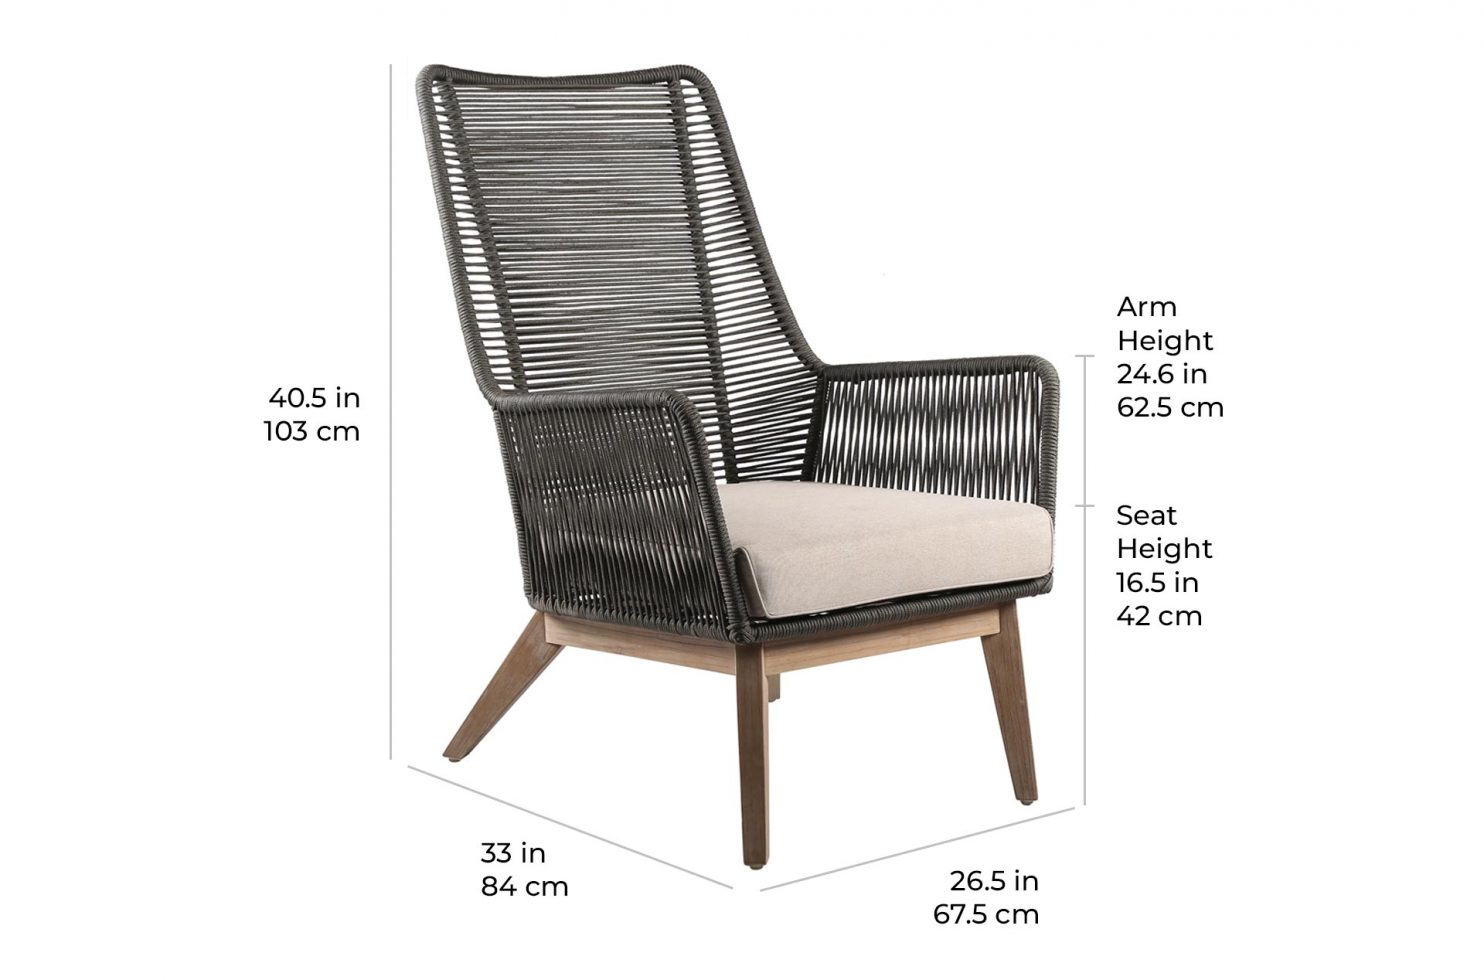 marco polo lounge chair E50499415 scale dims